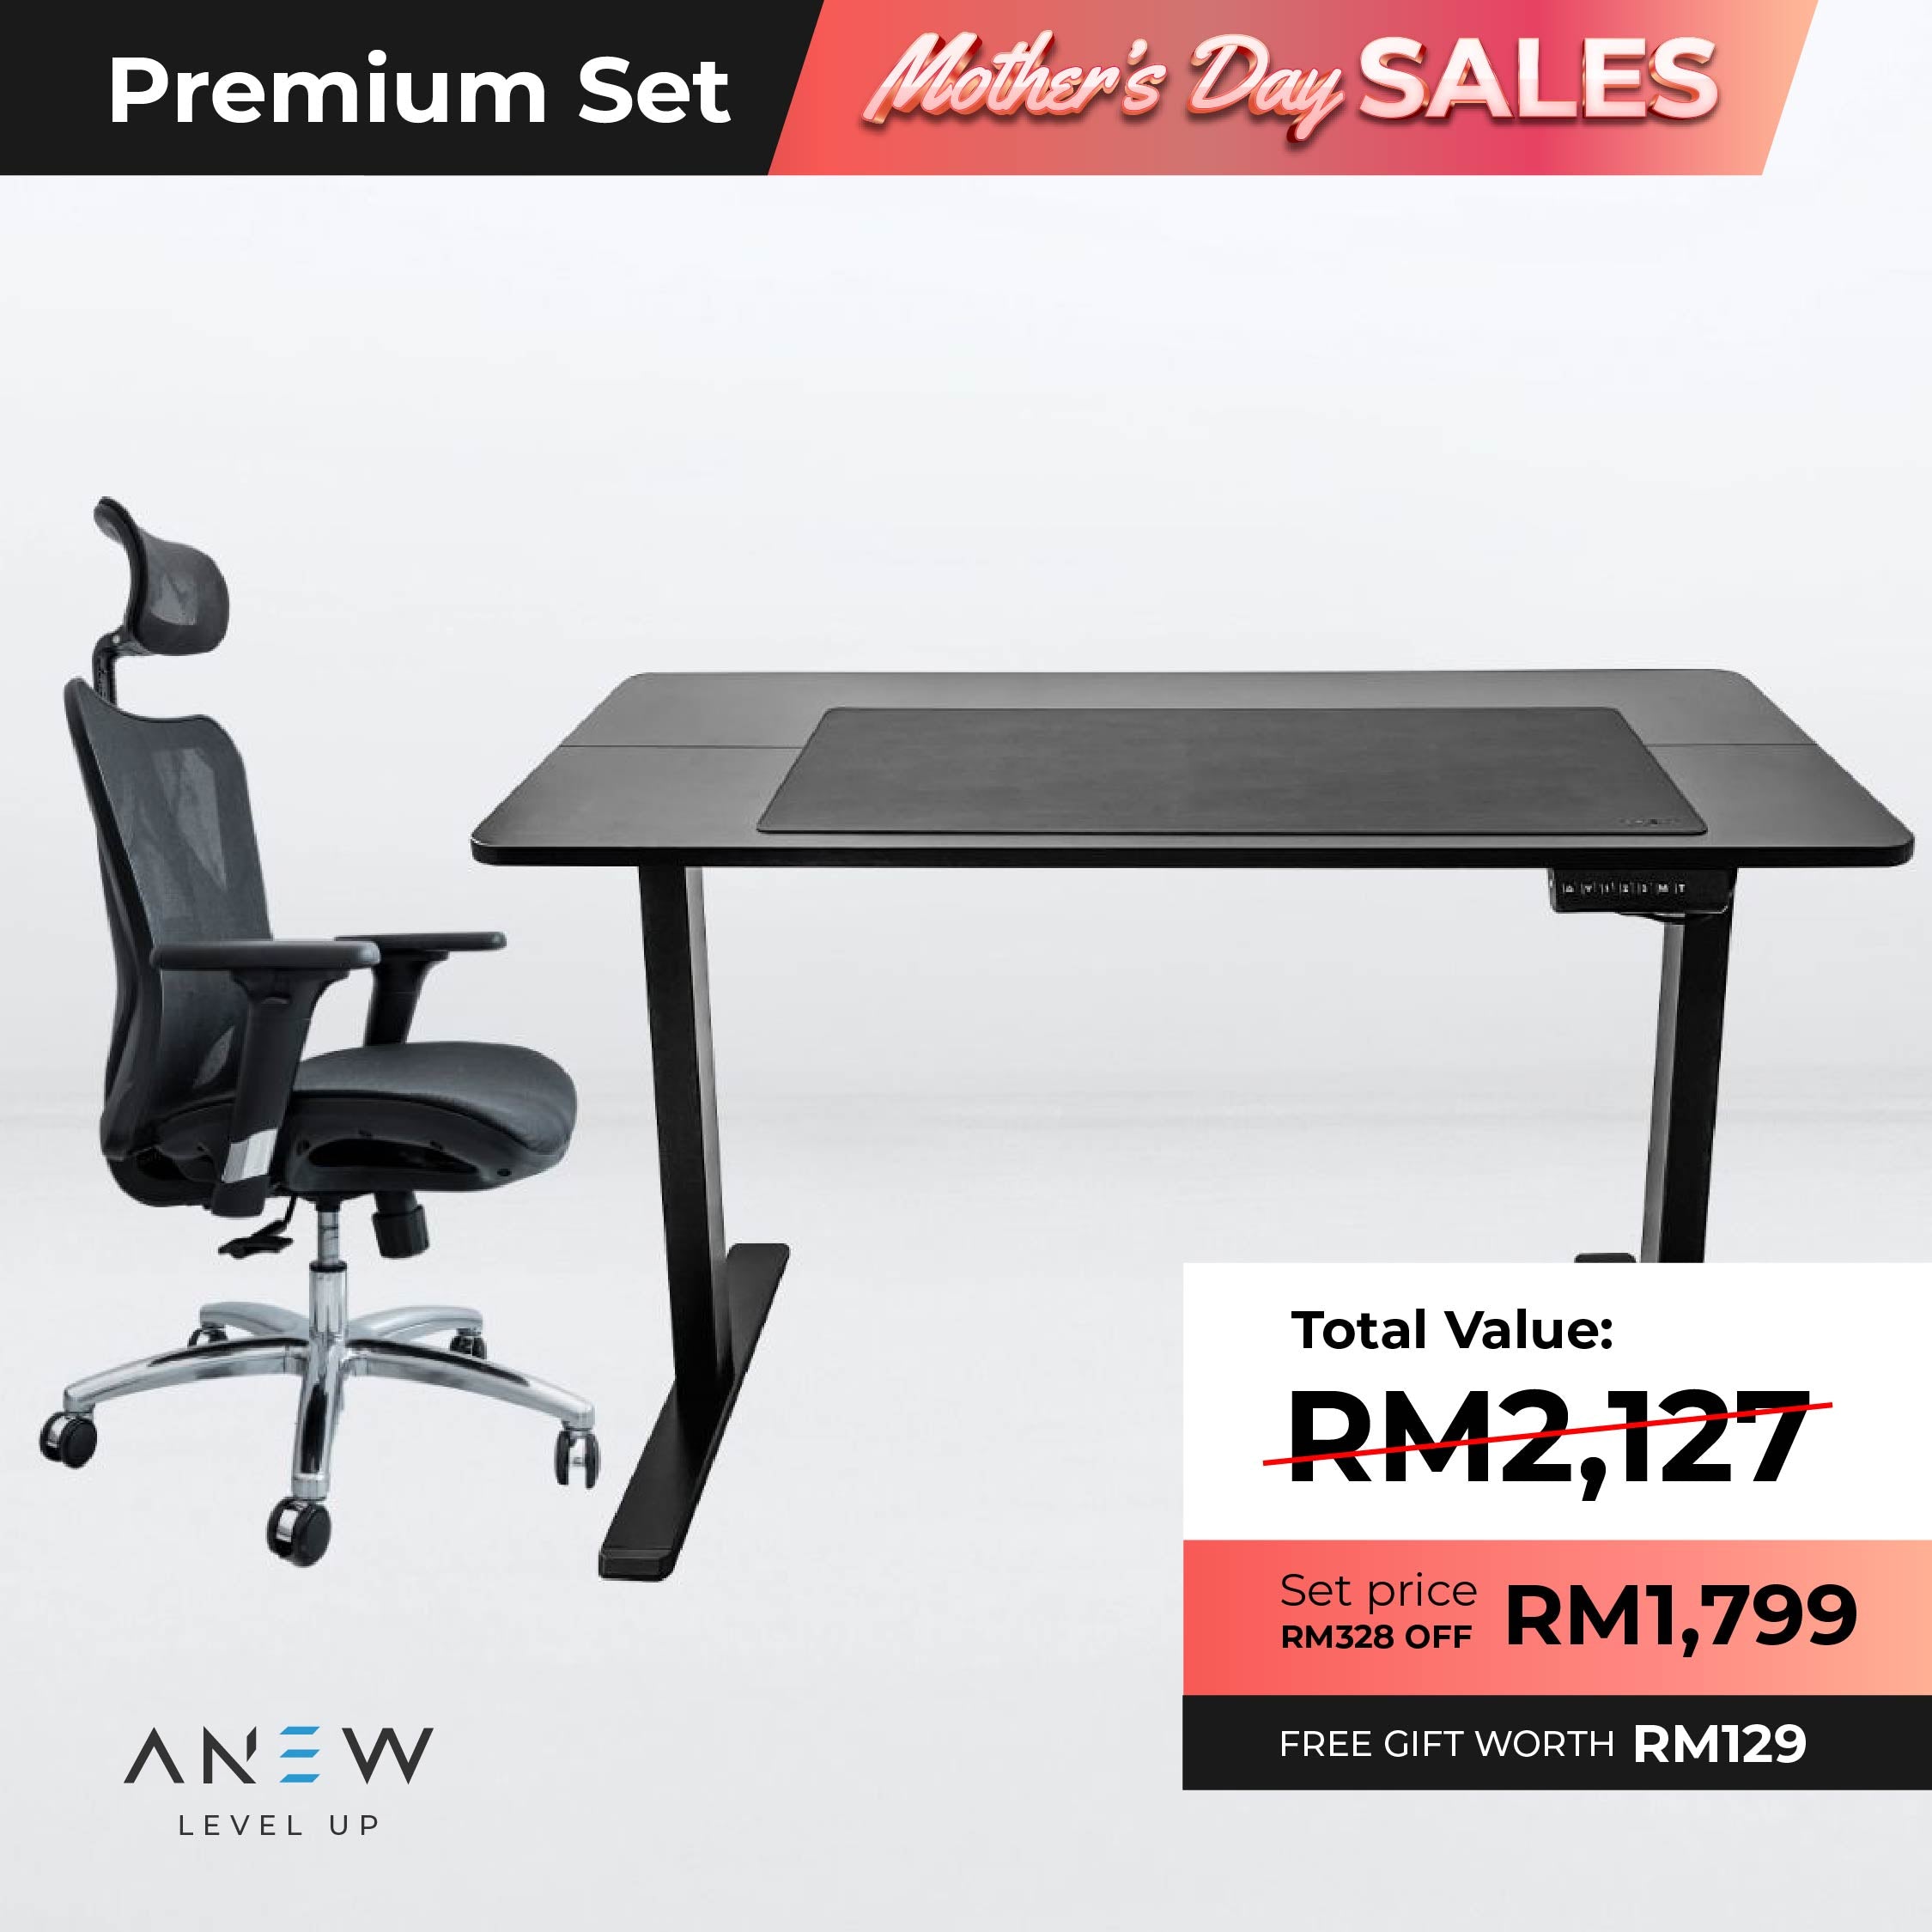 ANEW Standard Smart Desk - Premium Set c/w Free Gift worth RM129